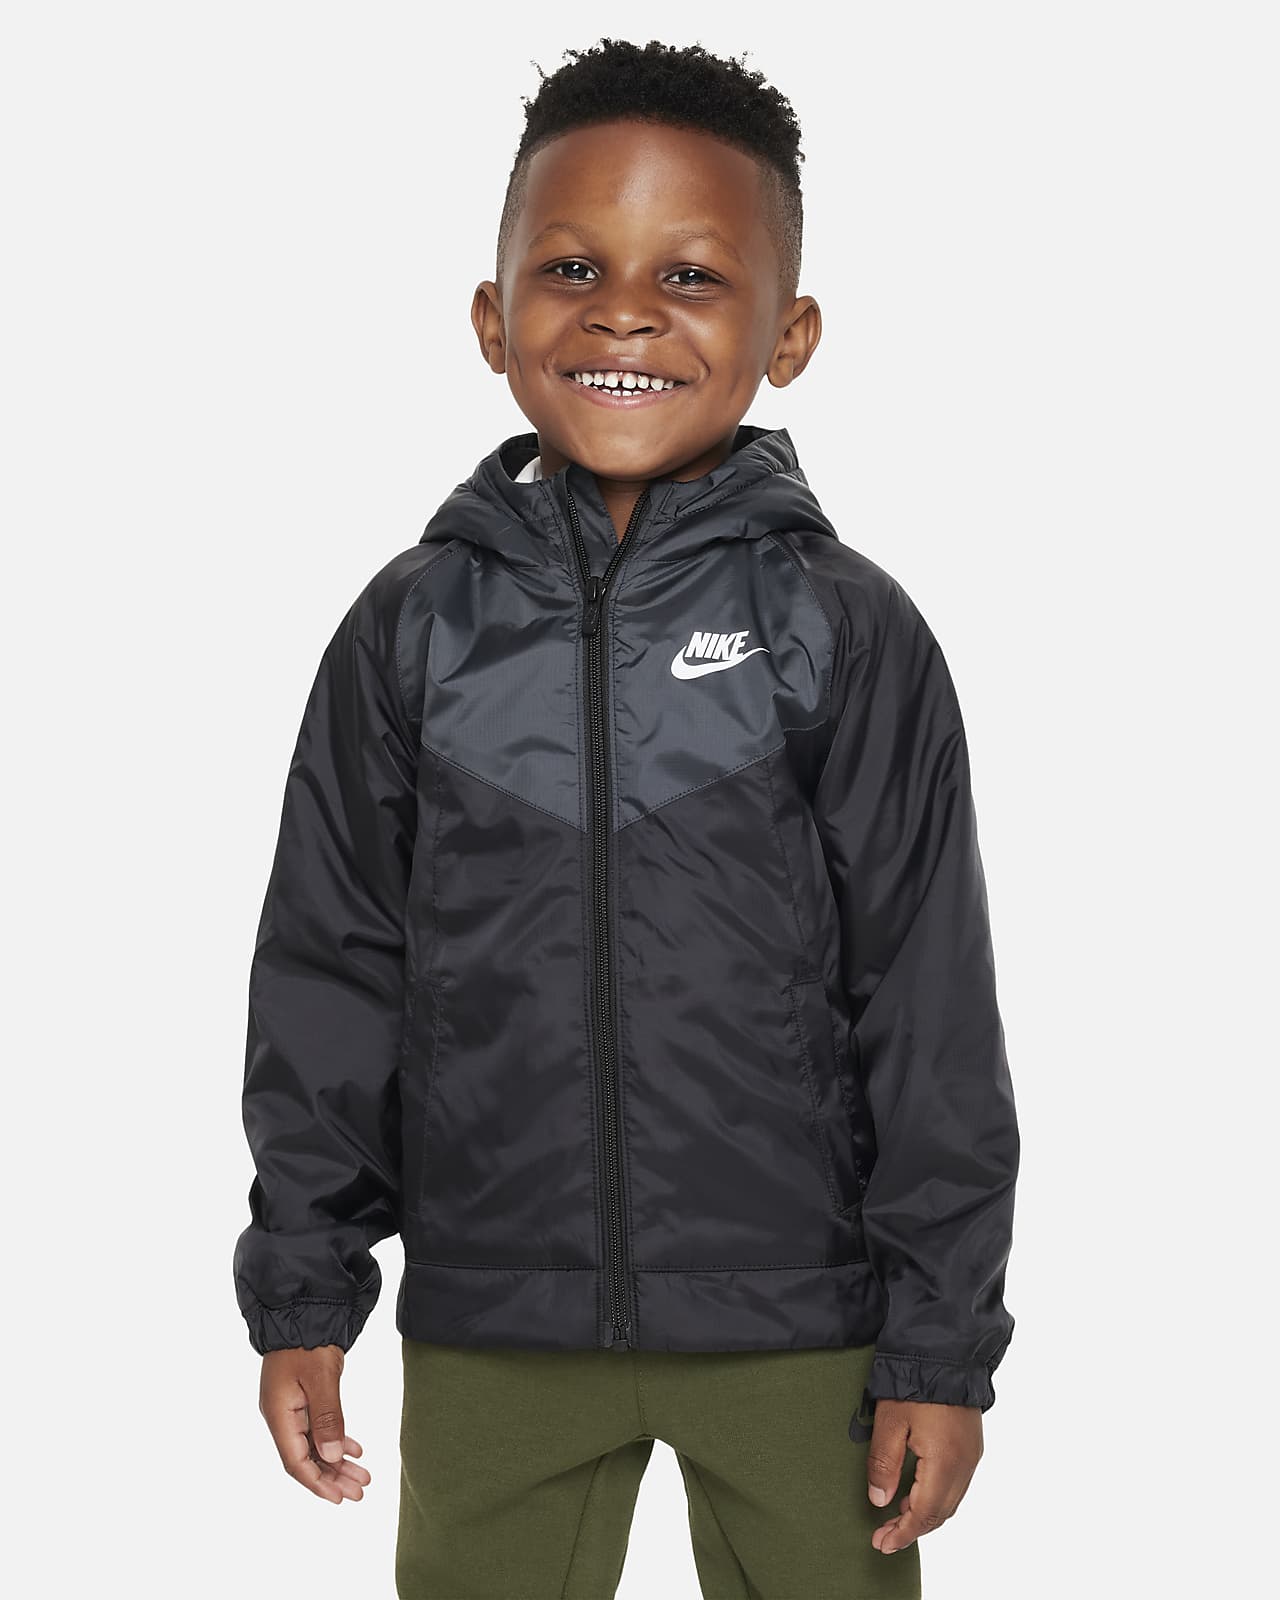 Een goede vriend Optimistisch Ochtend Nike Sportswear Windrunner Toddler Full-Zip Jacket. Nike.com